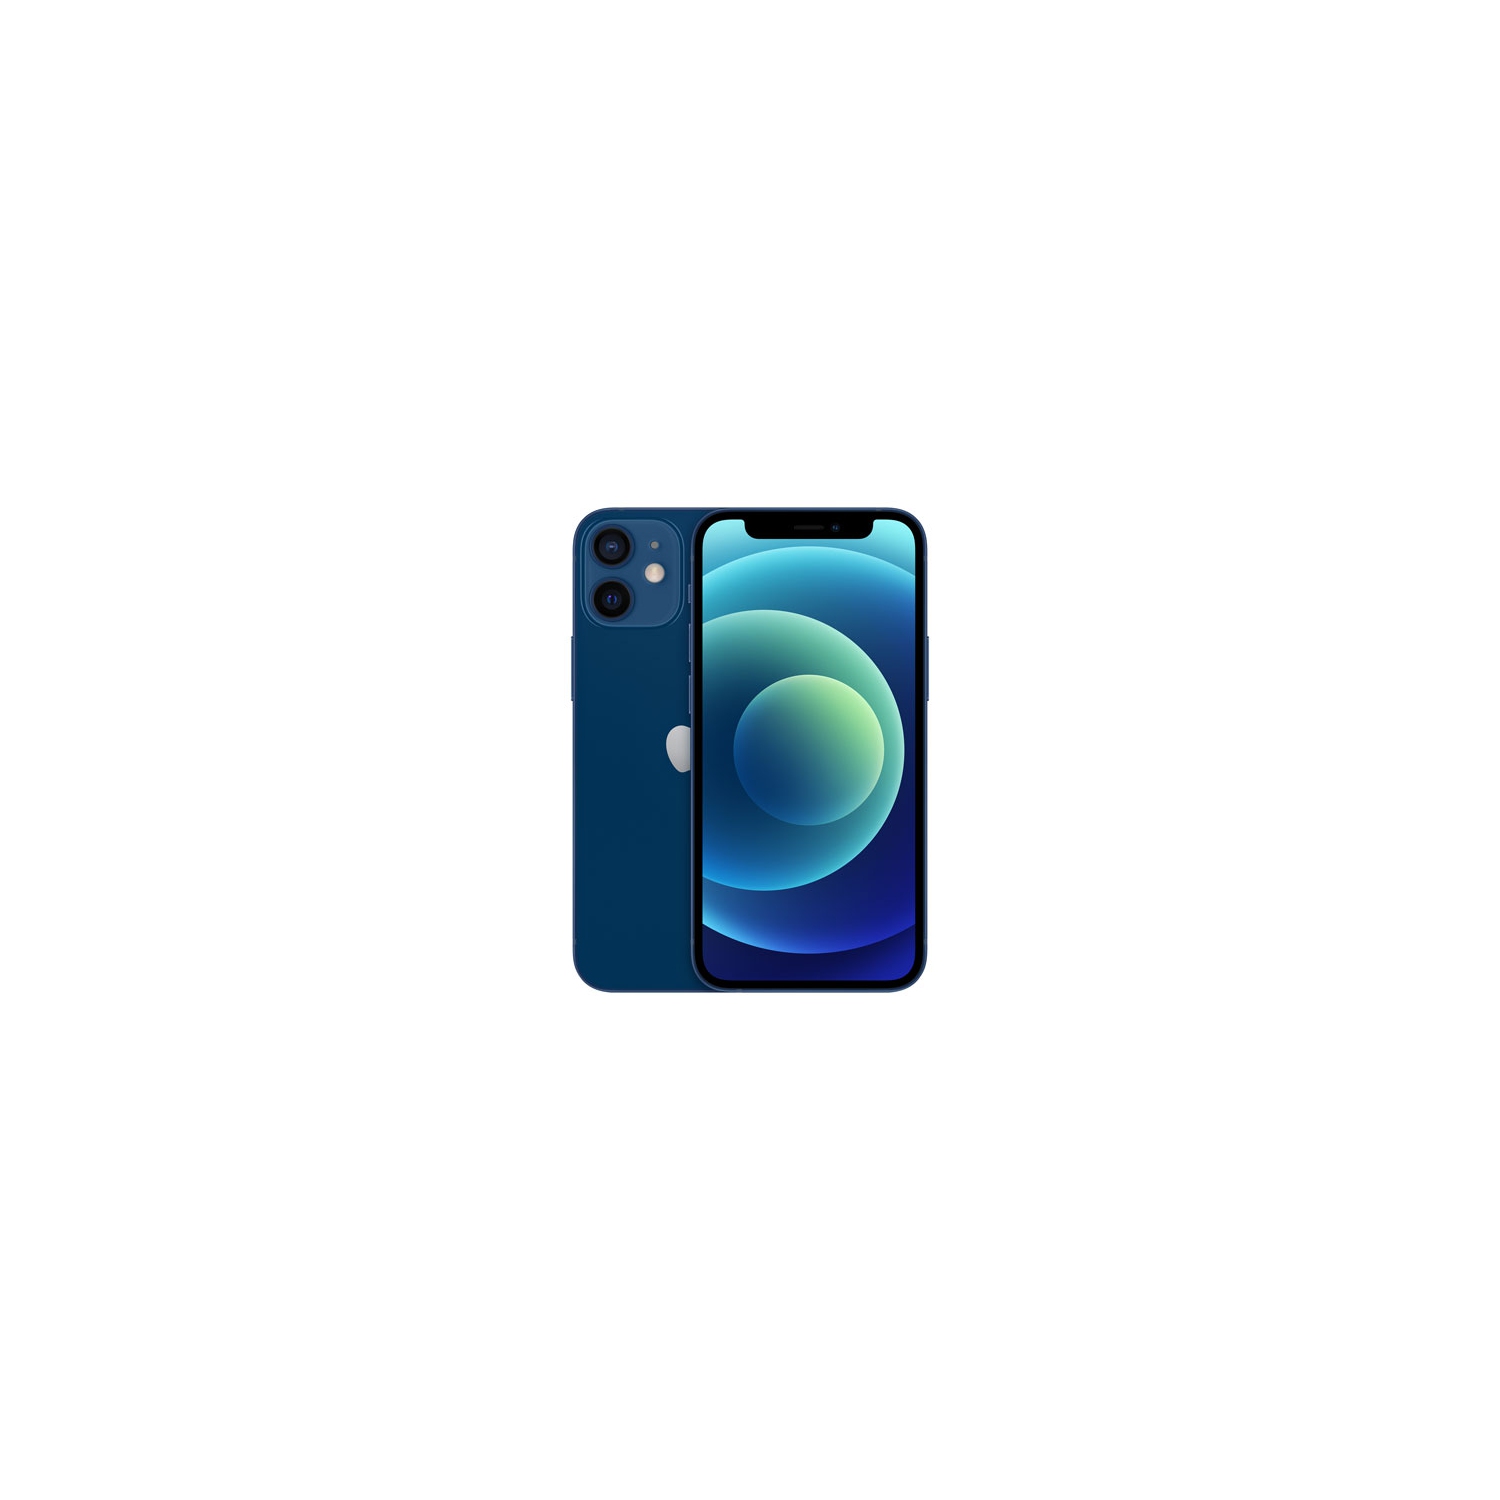 Refurbished (Good) - Apple iPhone 12 mini 128GB Smartphone - Blue - Unlocked